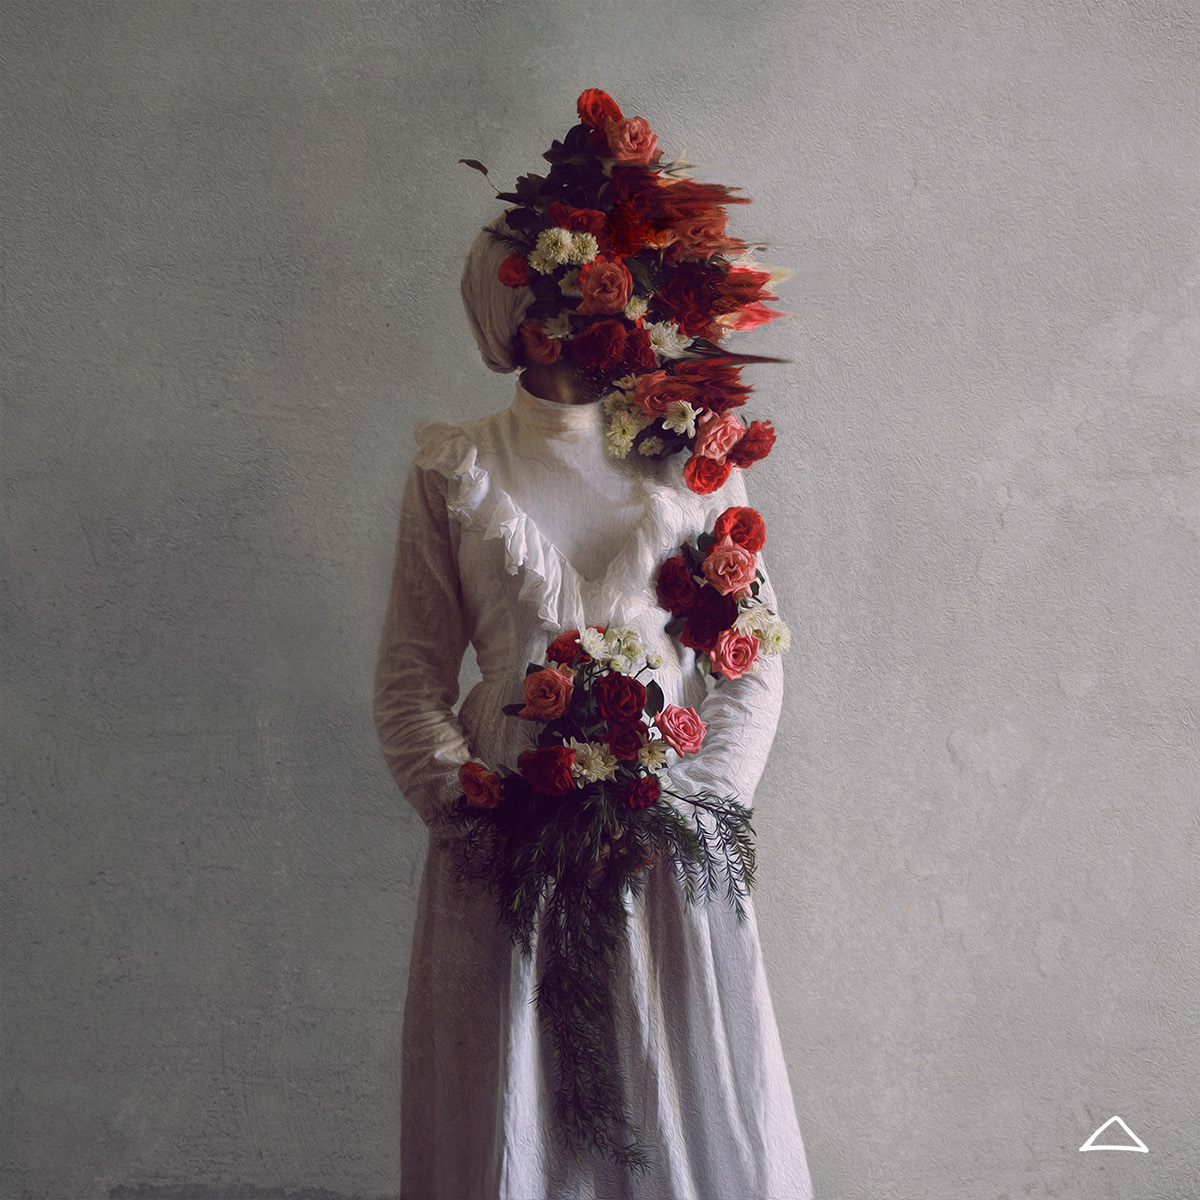 she floral conceptual conceptual-photography surrealism